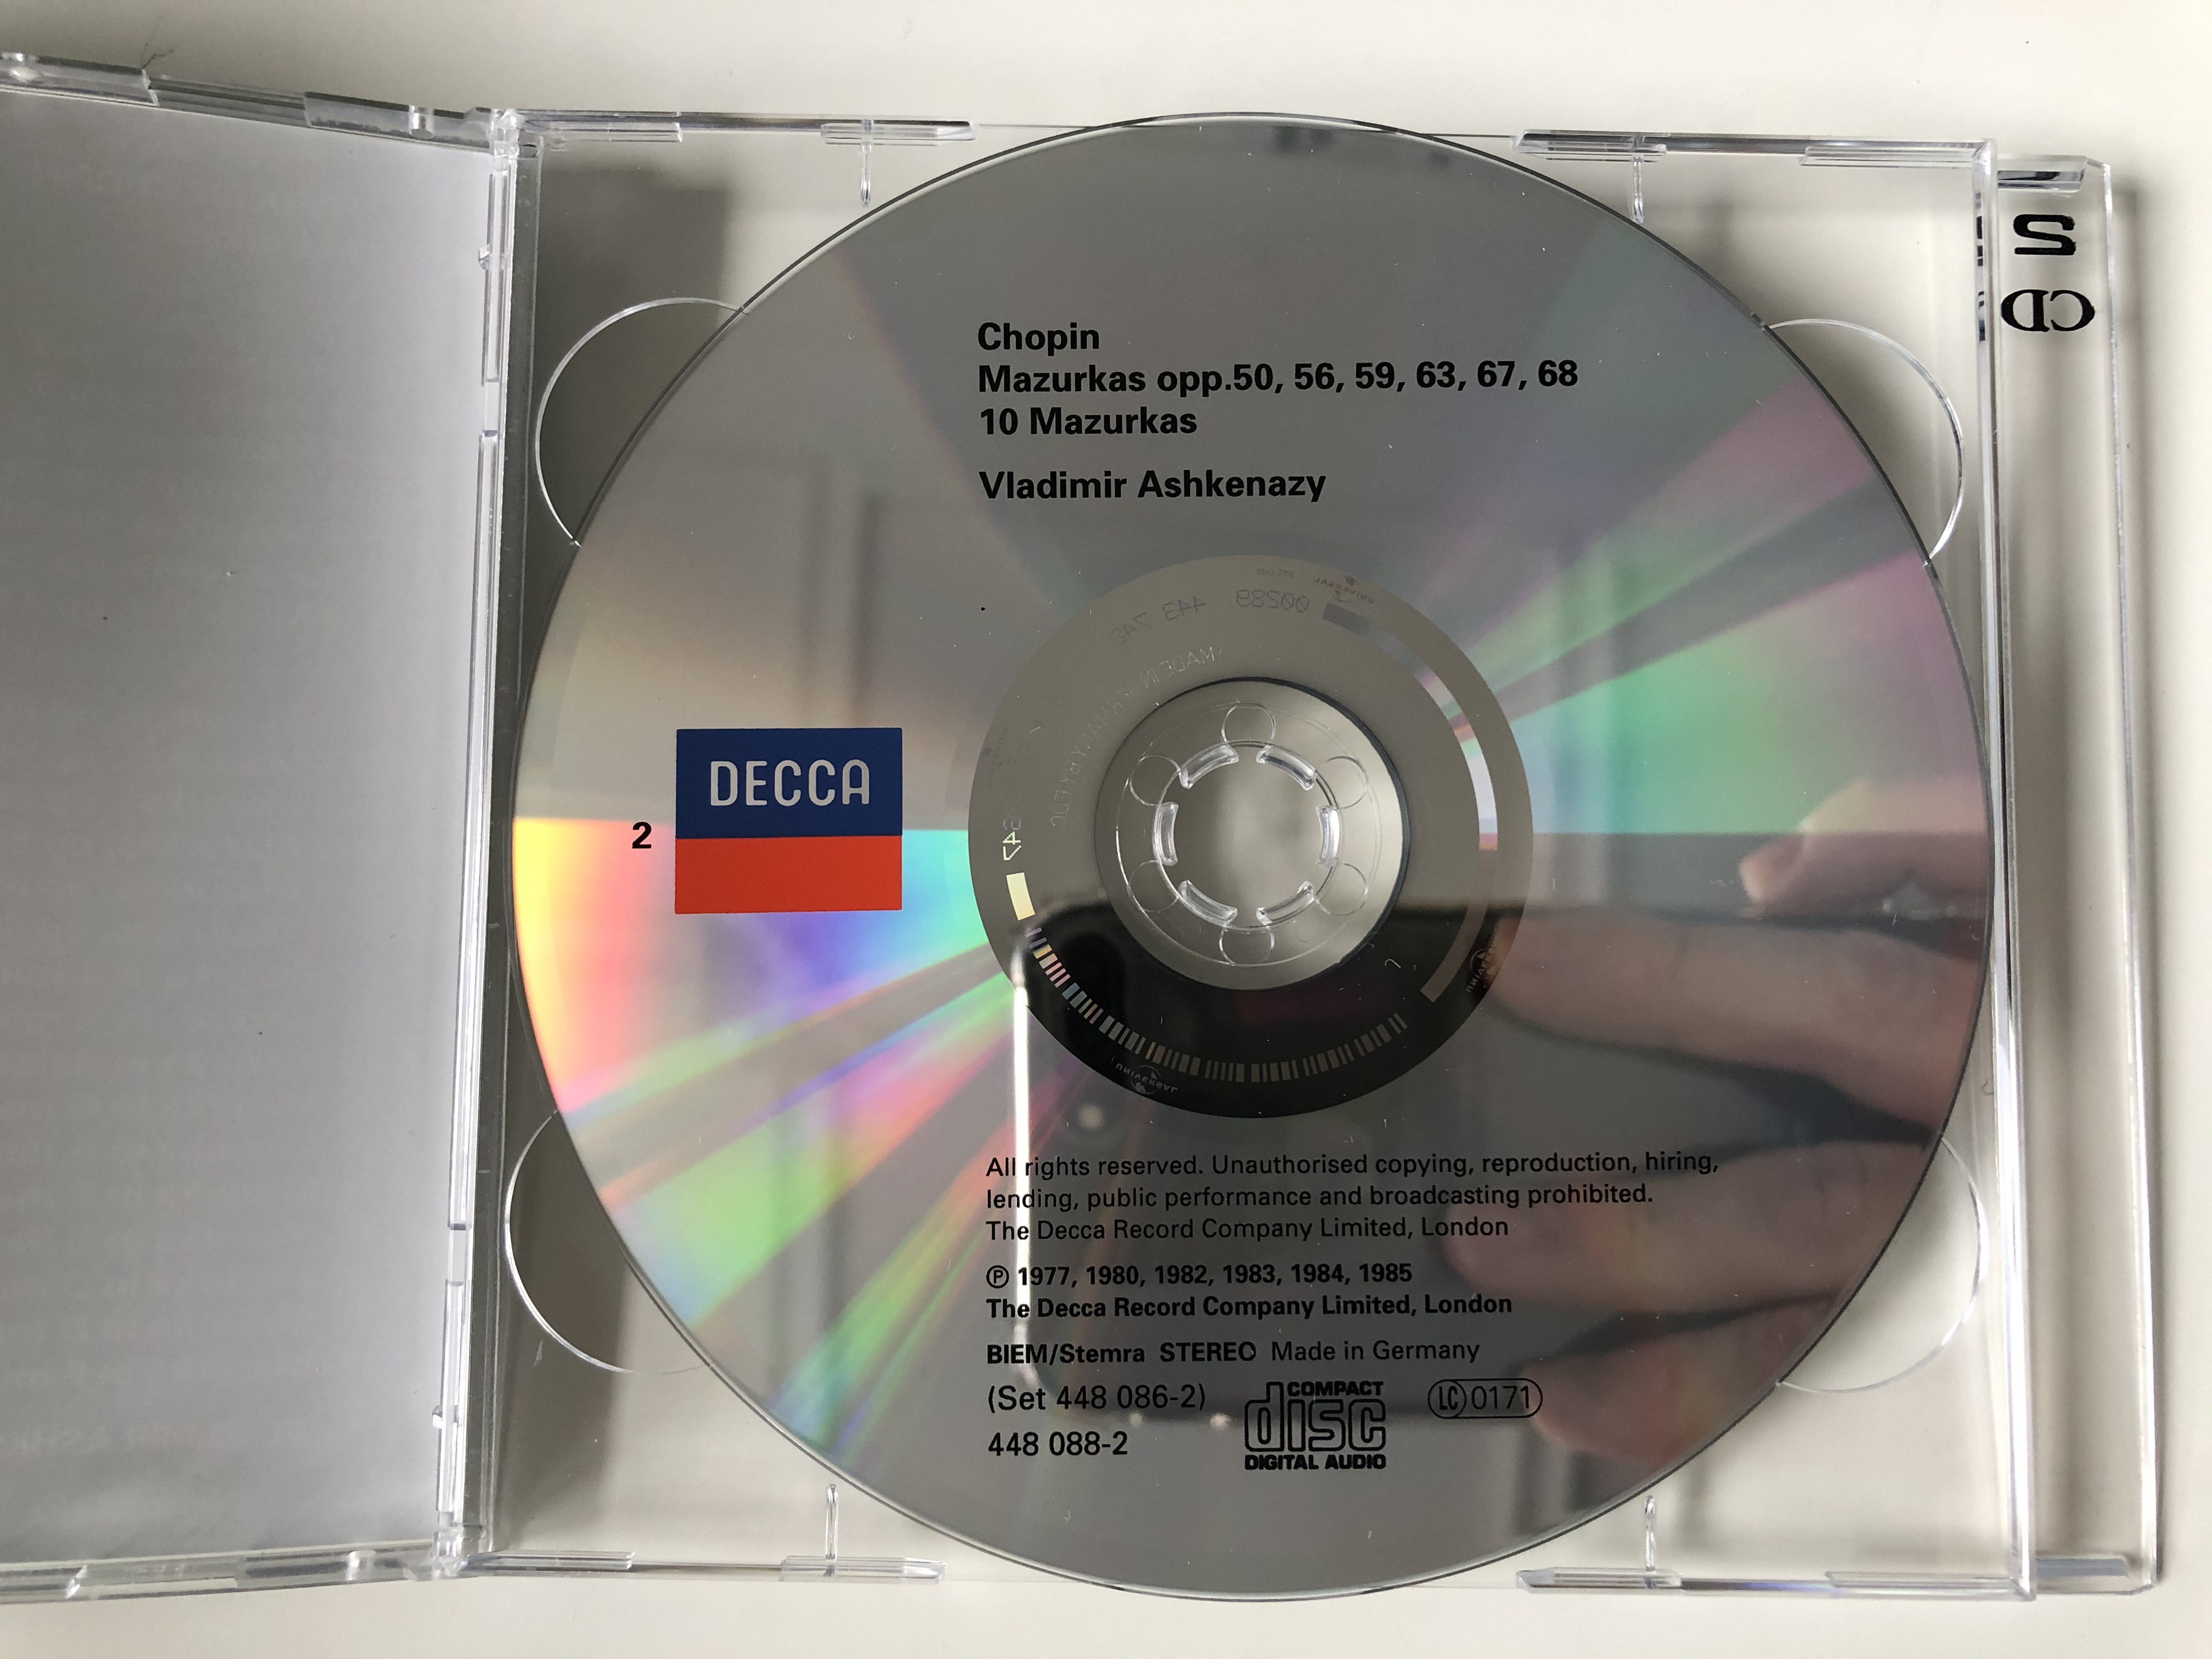 chopin-mazurkas-vladimir-ashkenazy-double-decca-decca-2x-audio-cd-1996-448-086-2-6-.jpg